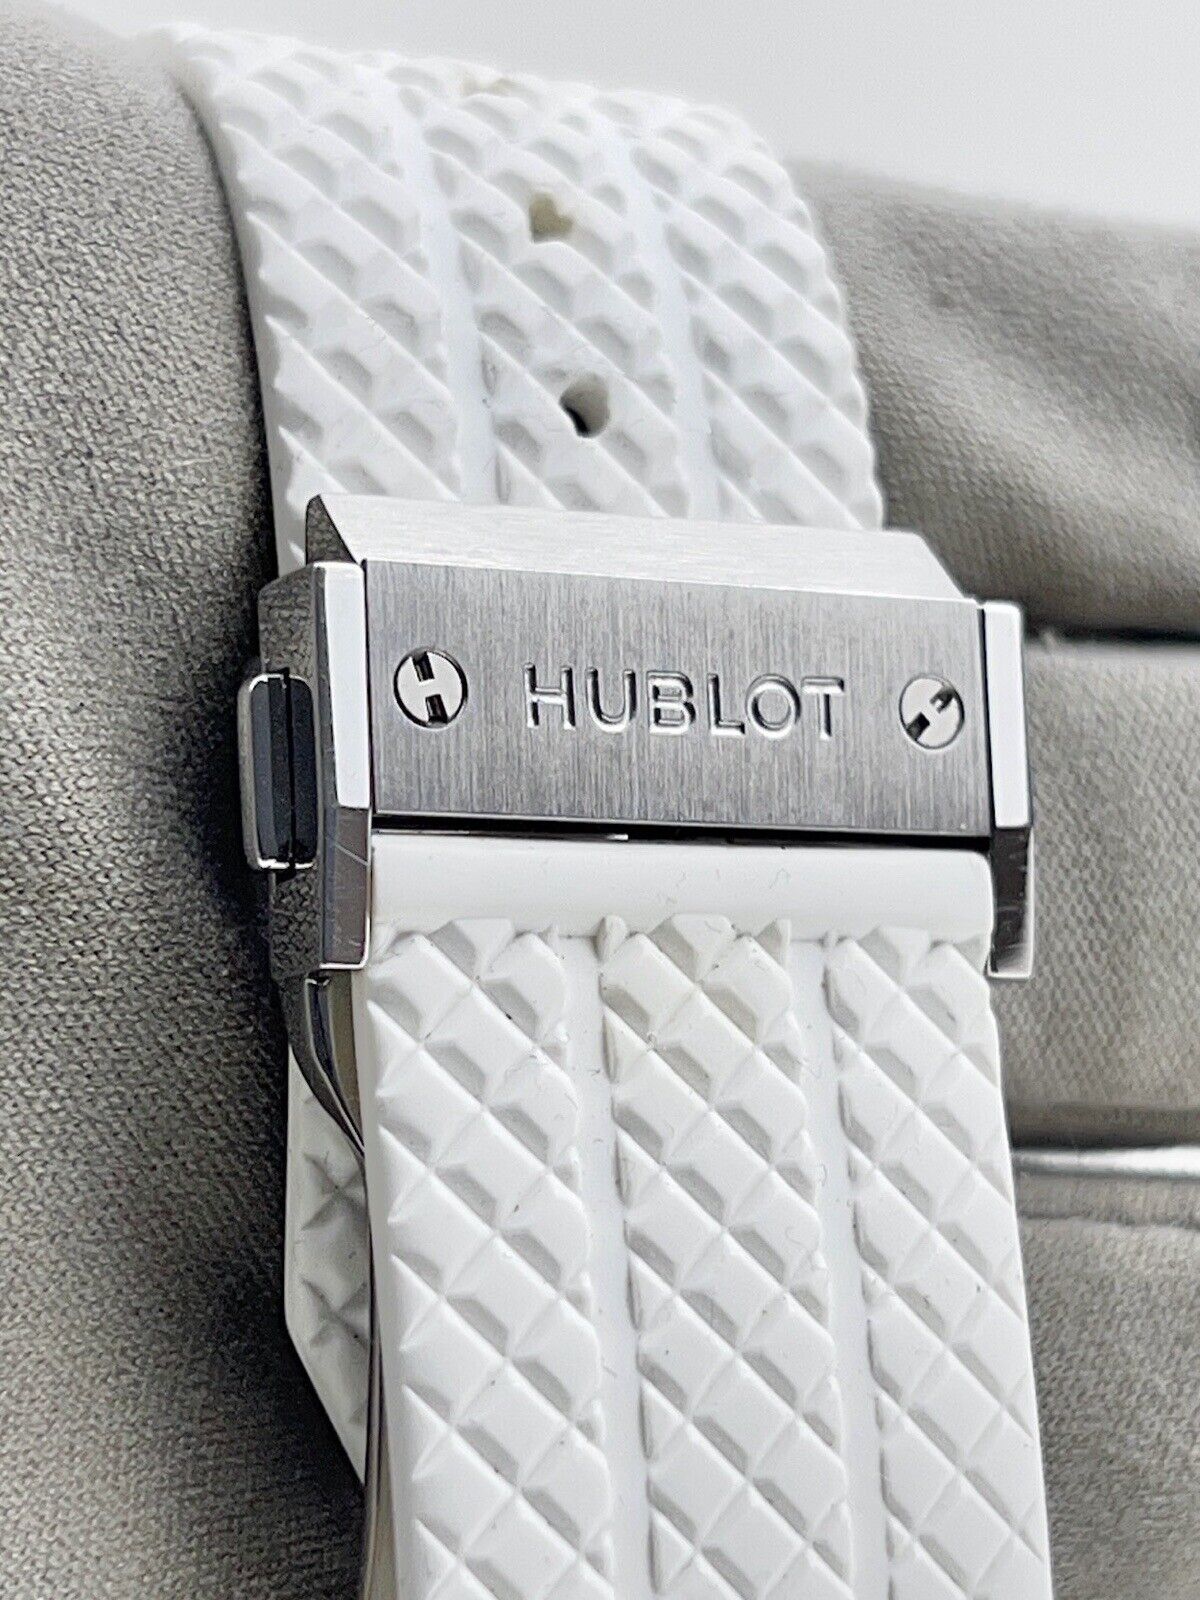 Hublot Big Bang Steel White 44mm Automatic Men’s Watch 301.SE.230.RW